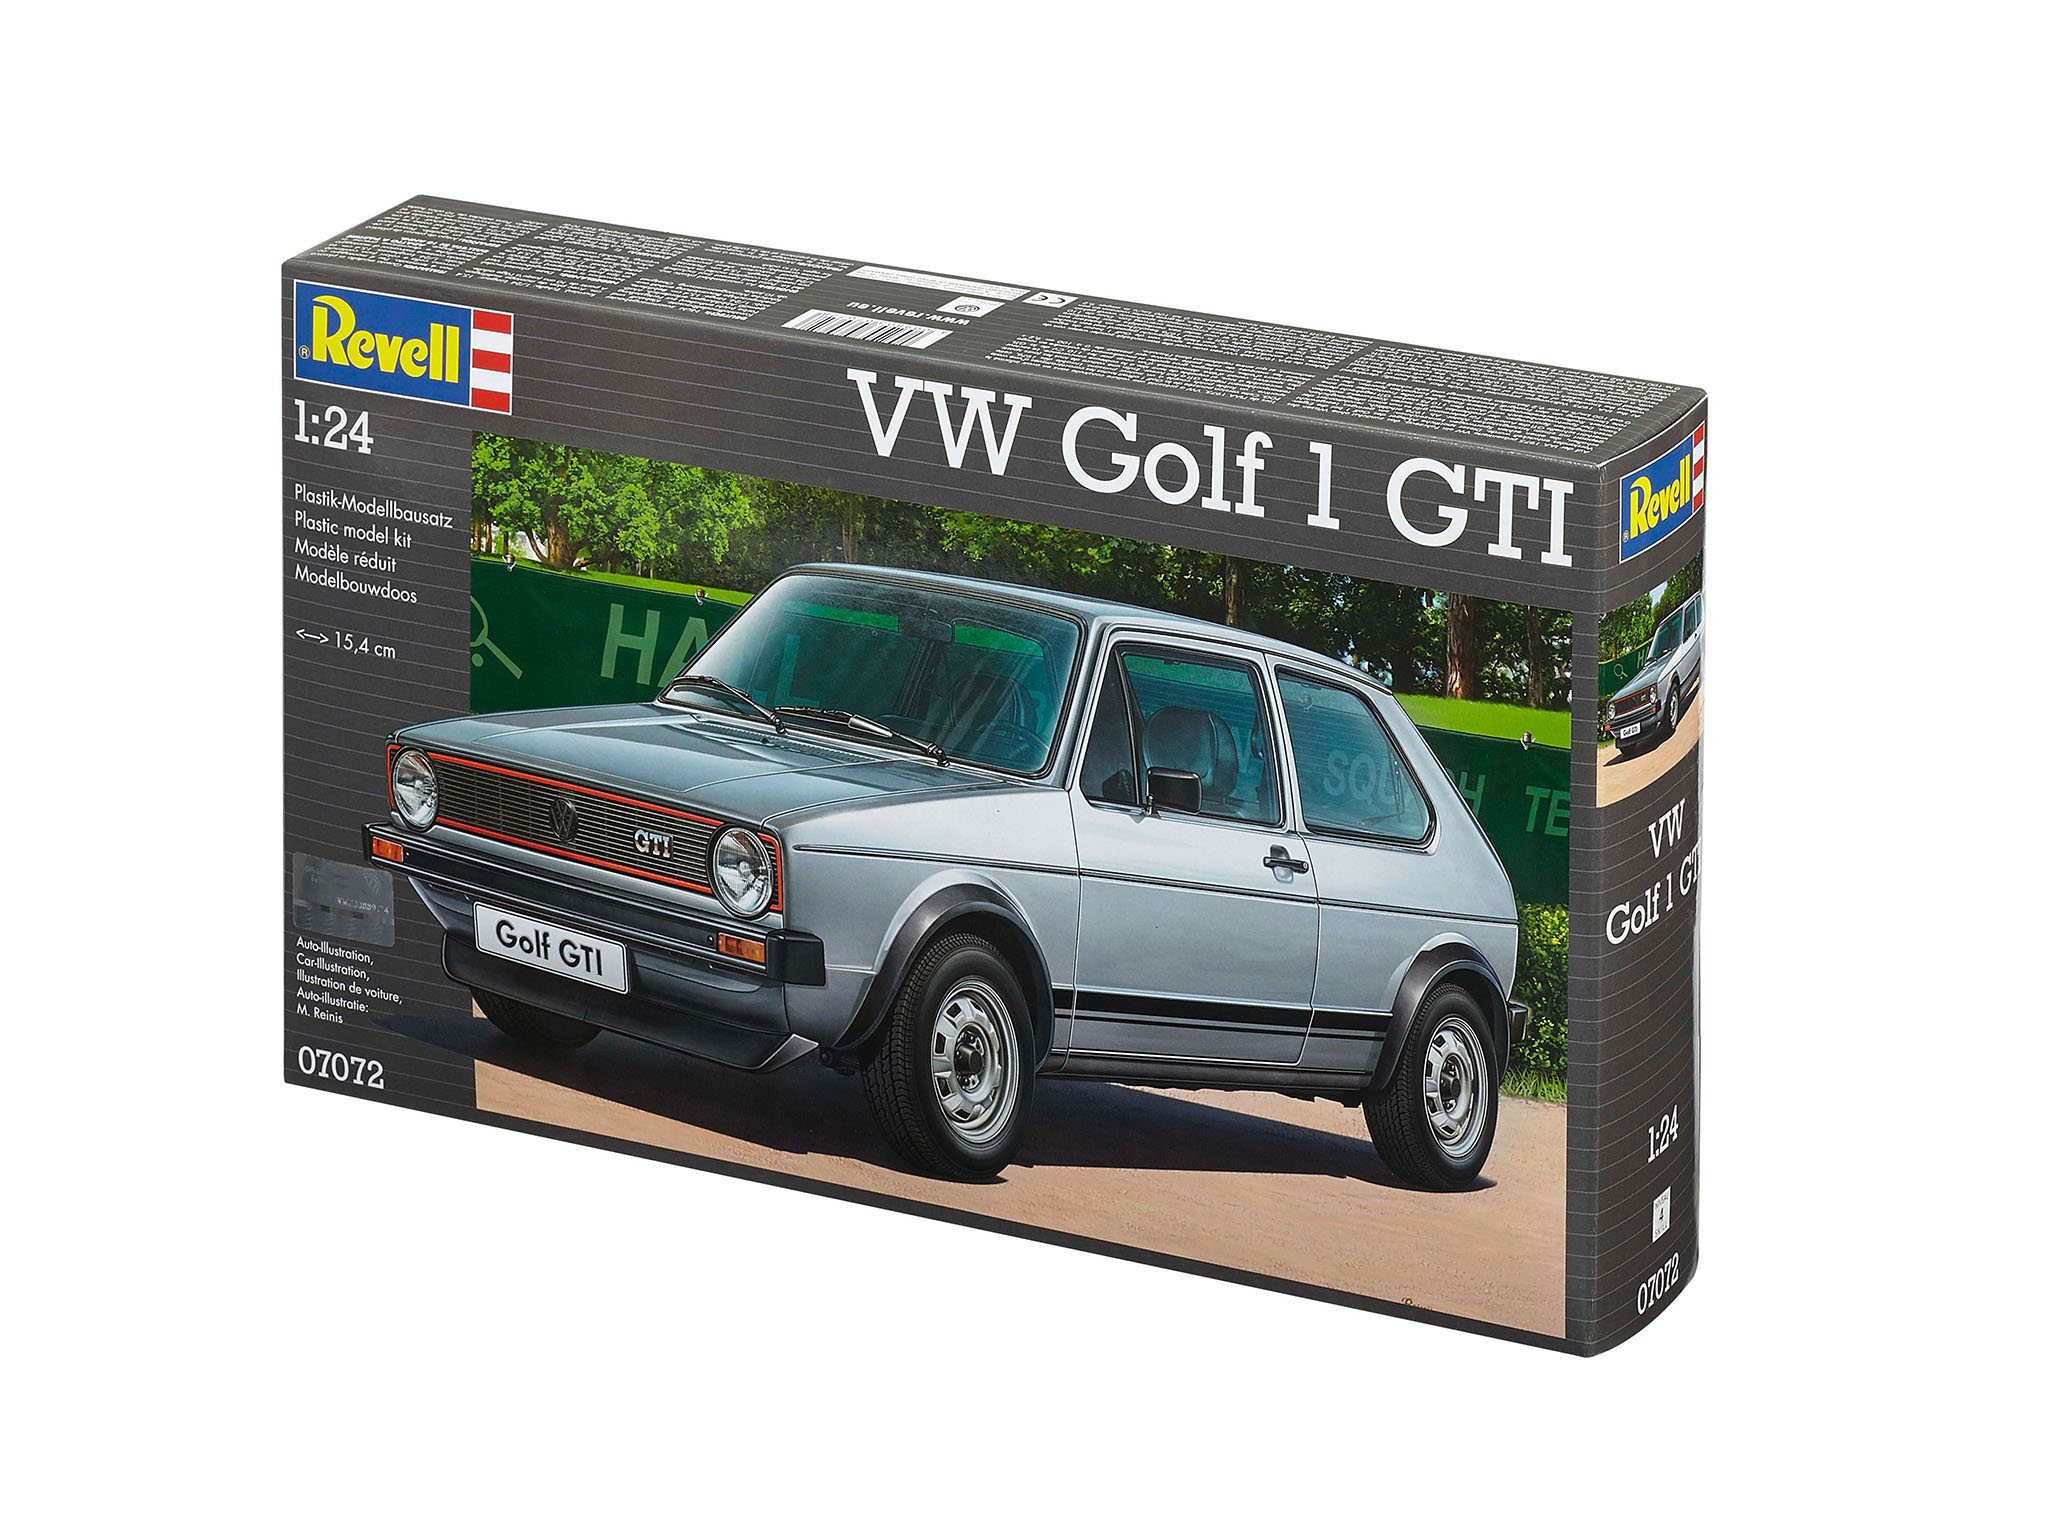 1 Mehrfarbig Golf Modellbausatz, VW REVELL 07072 GTI